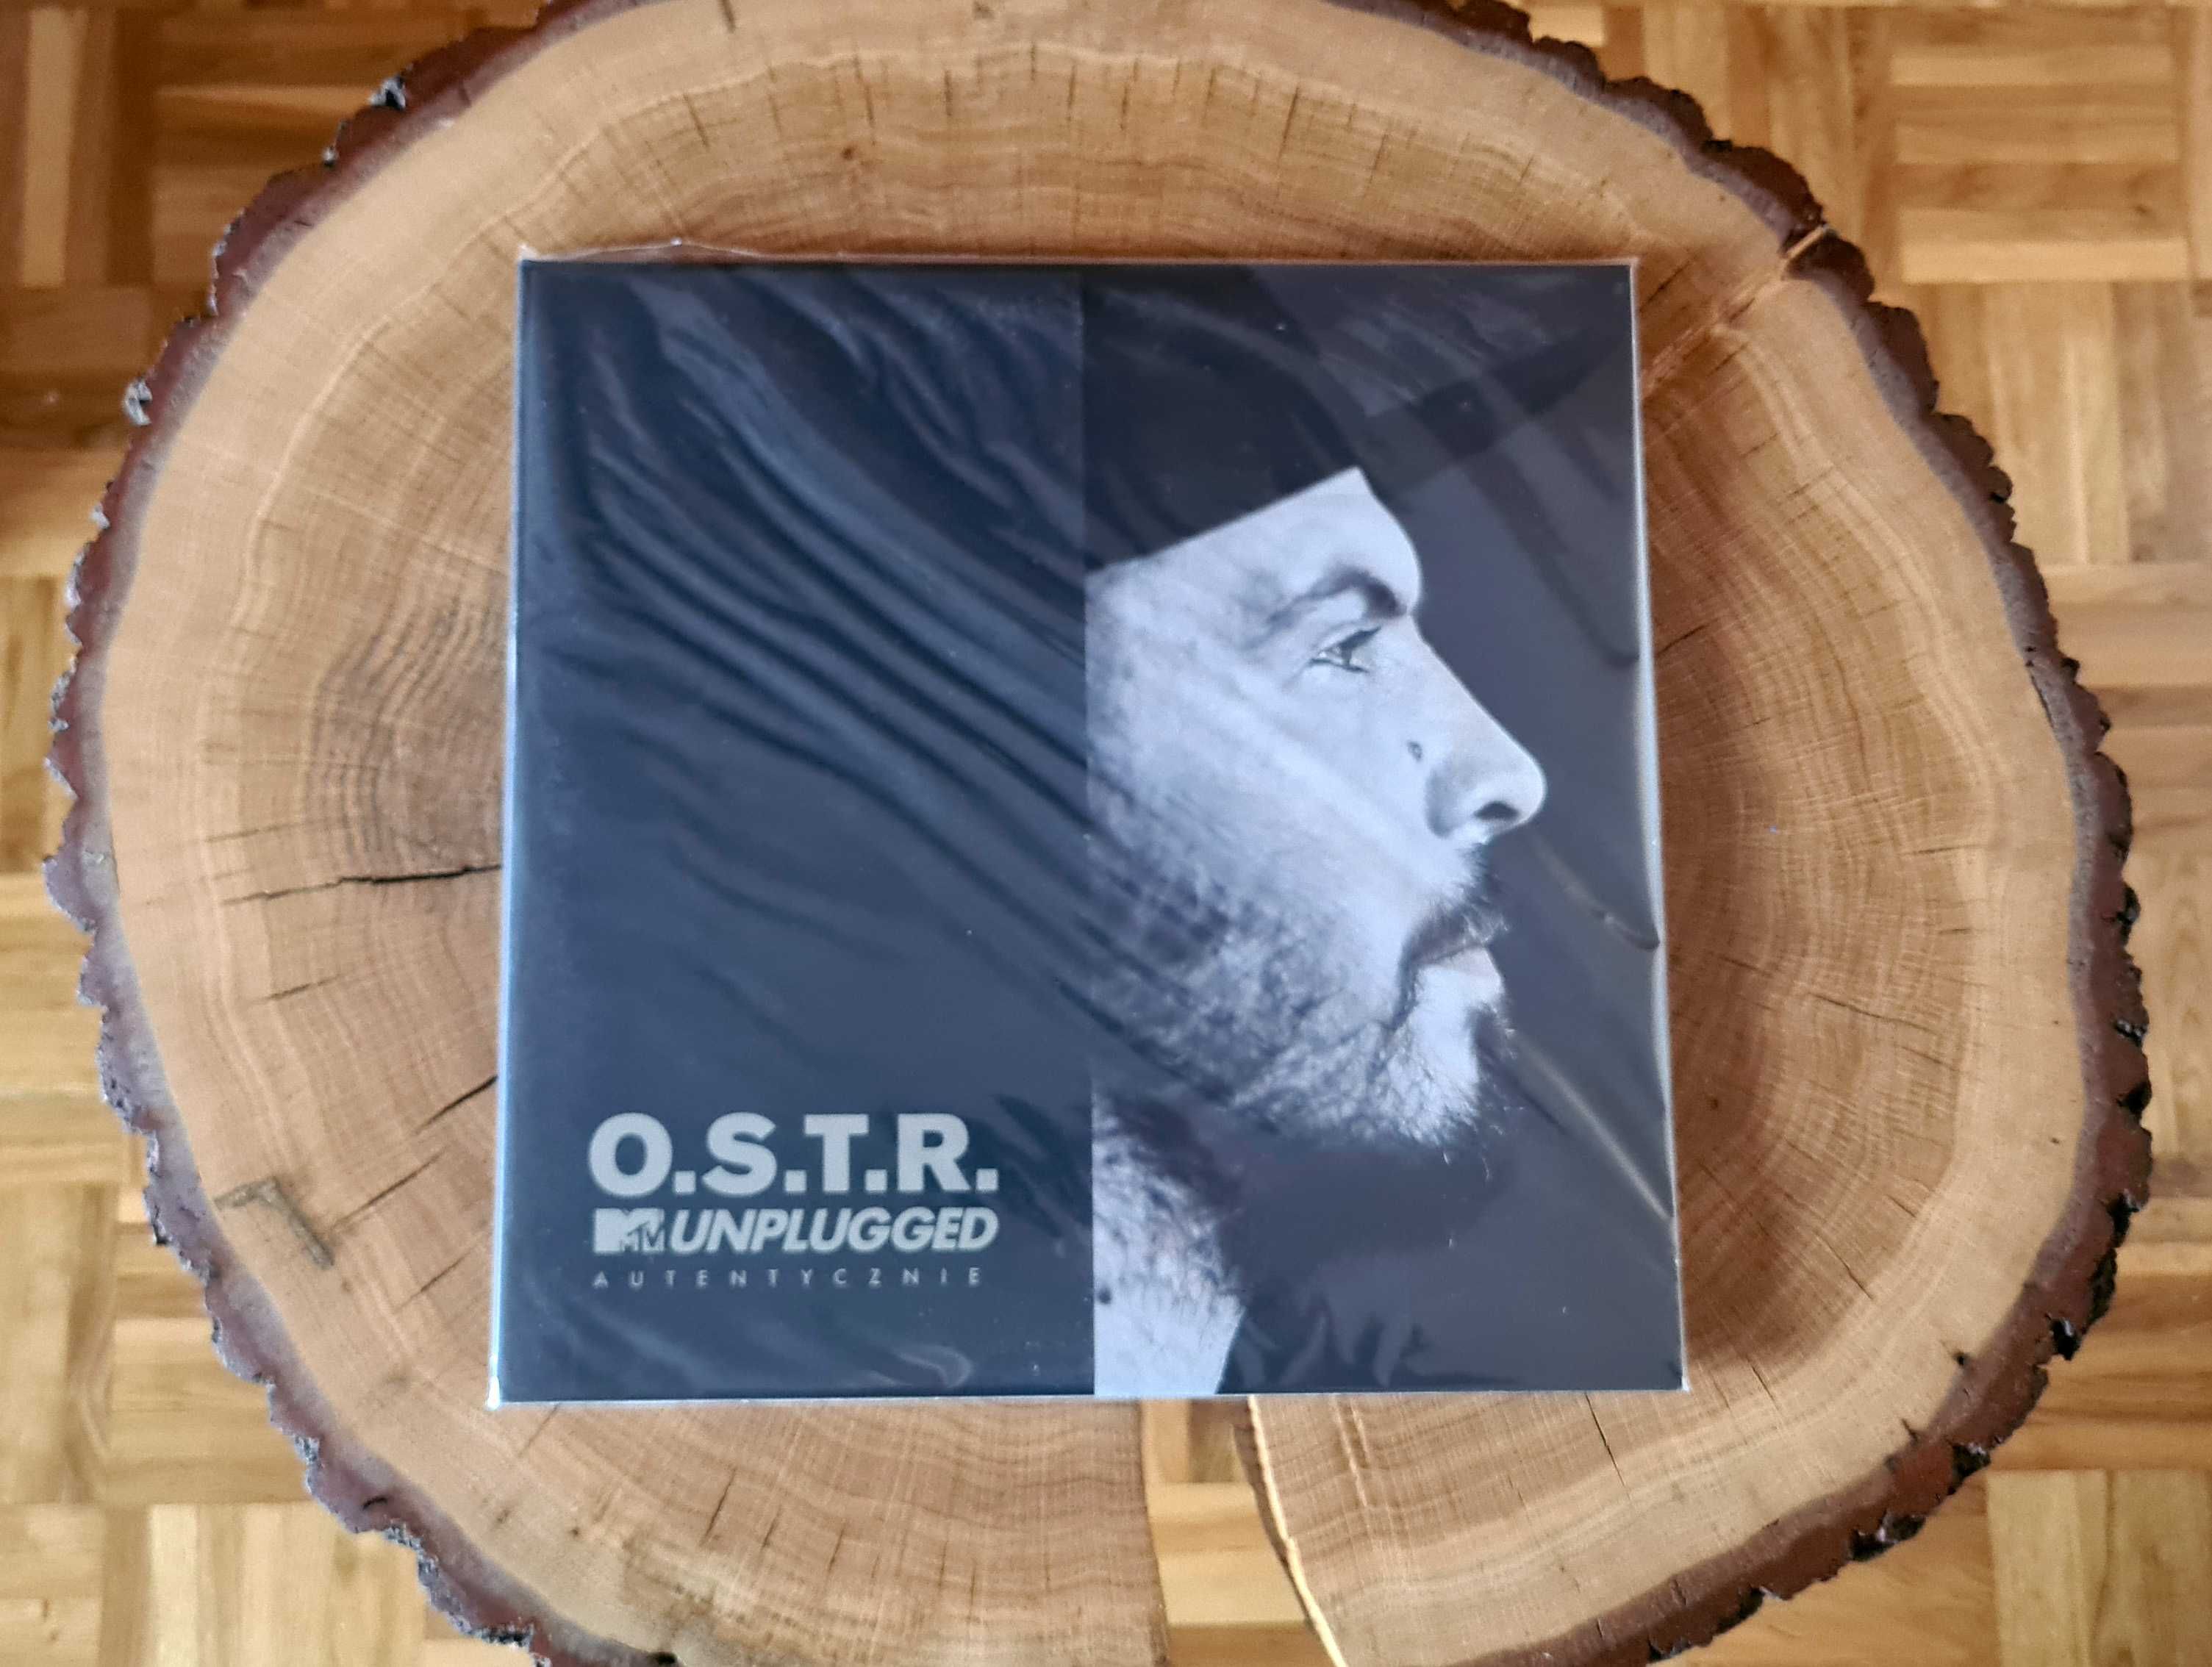 OSTR - MTV Unplugged. Autentycznie 2 x LP black